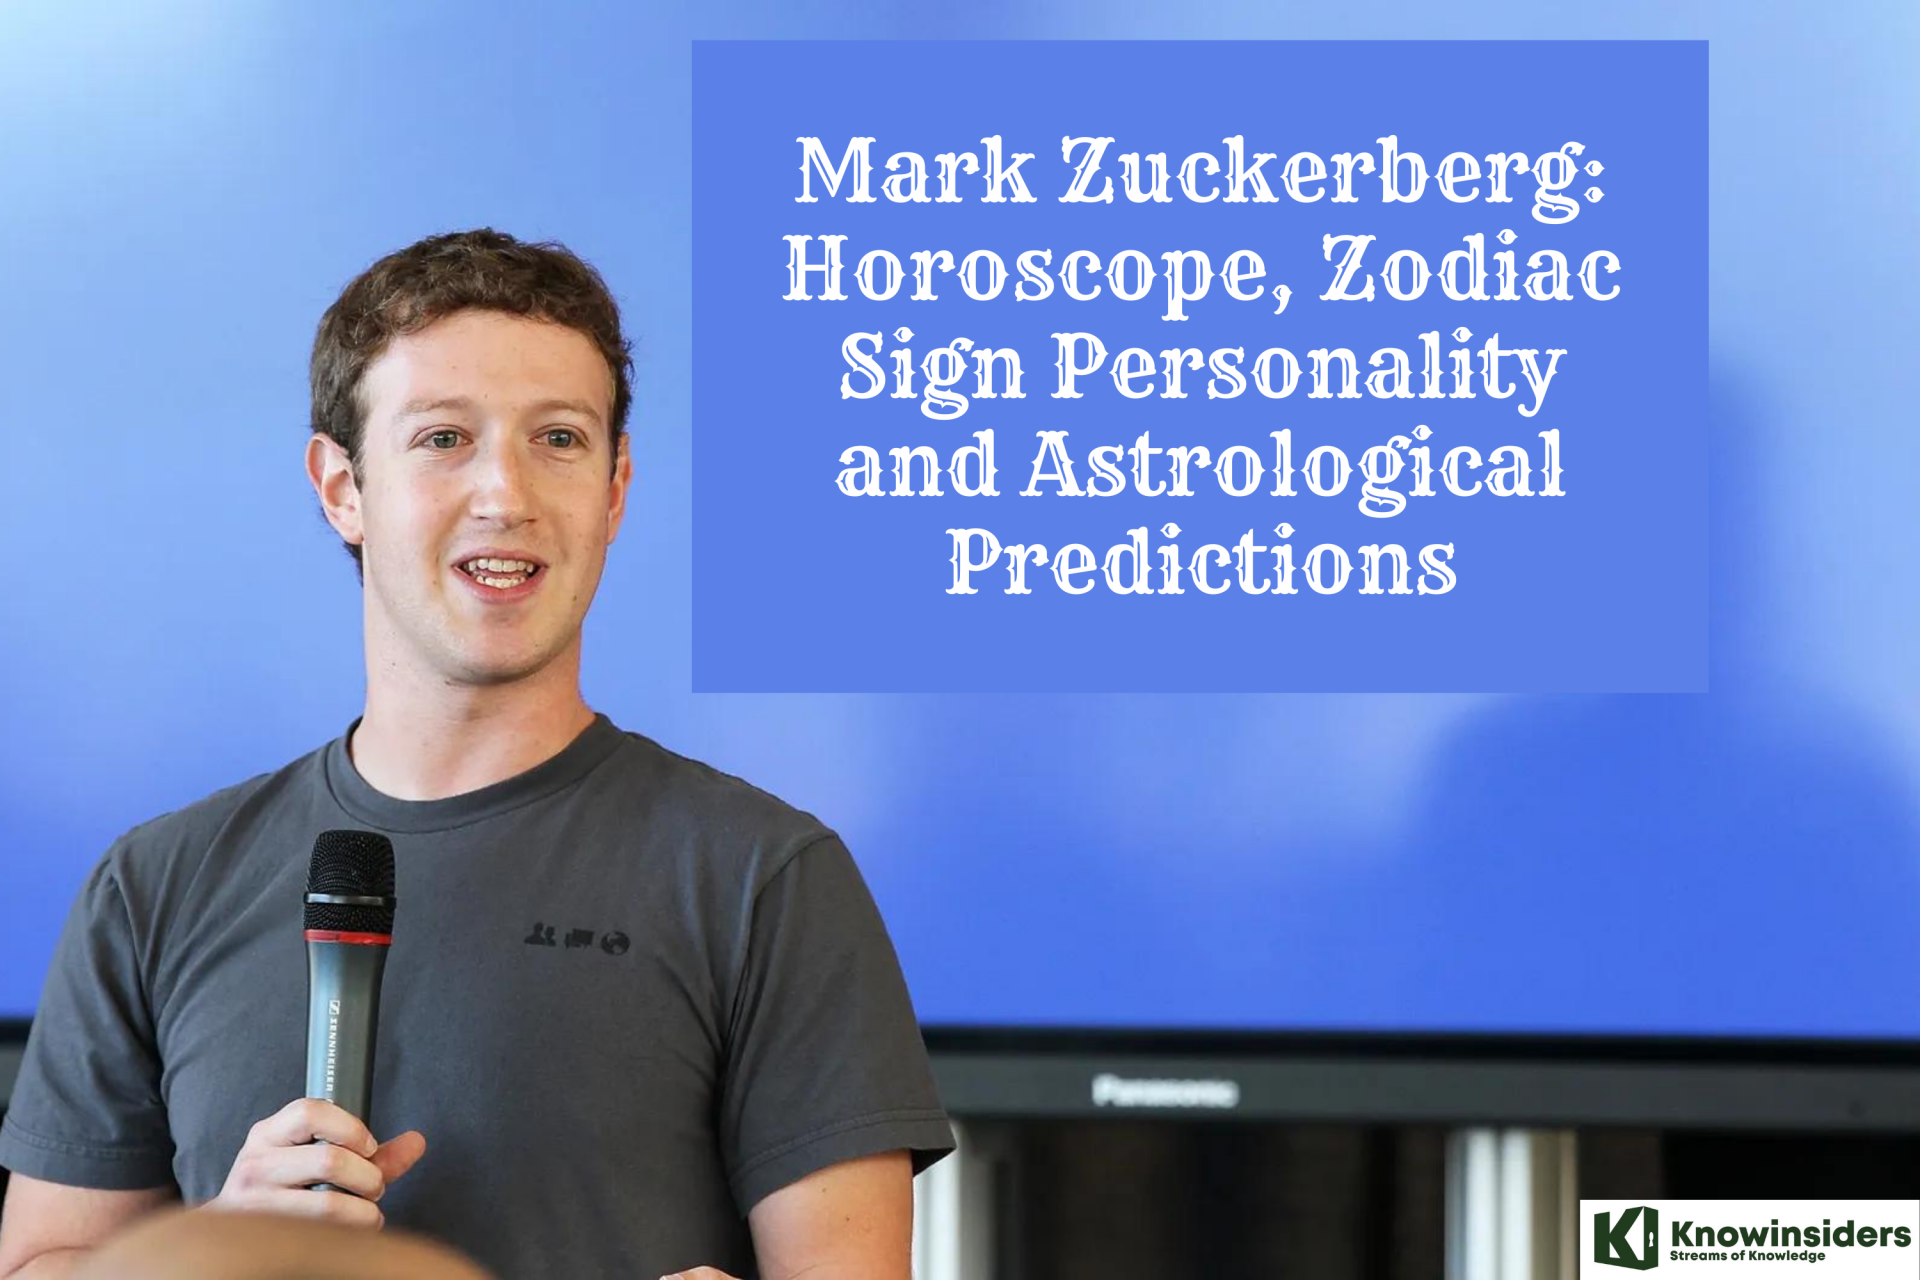 Mark Zuckerberg: Horoscope, Zodiac Sign Personality and Astrological Predictions